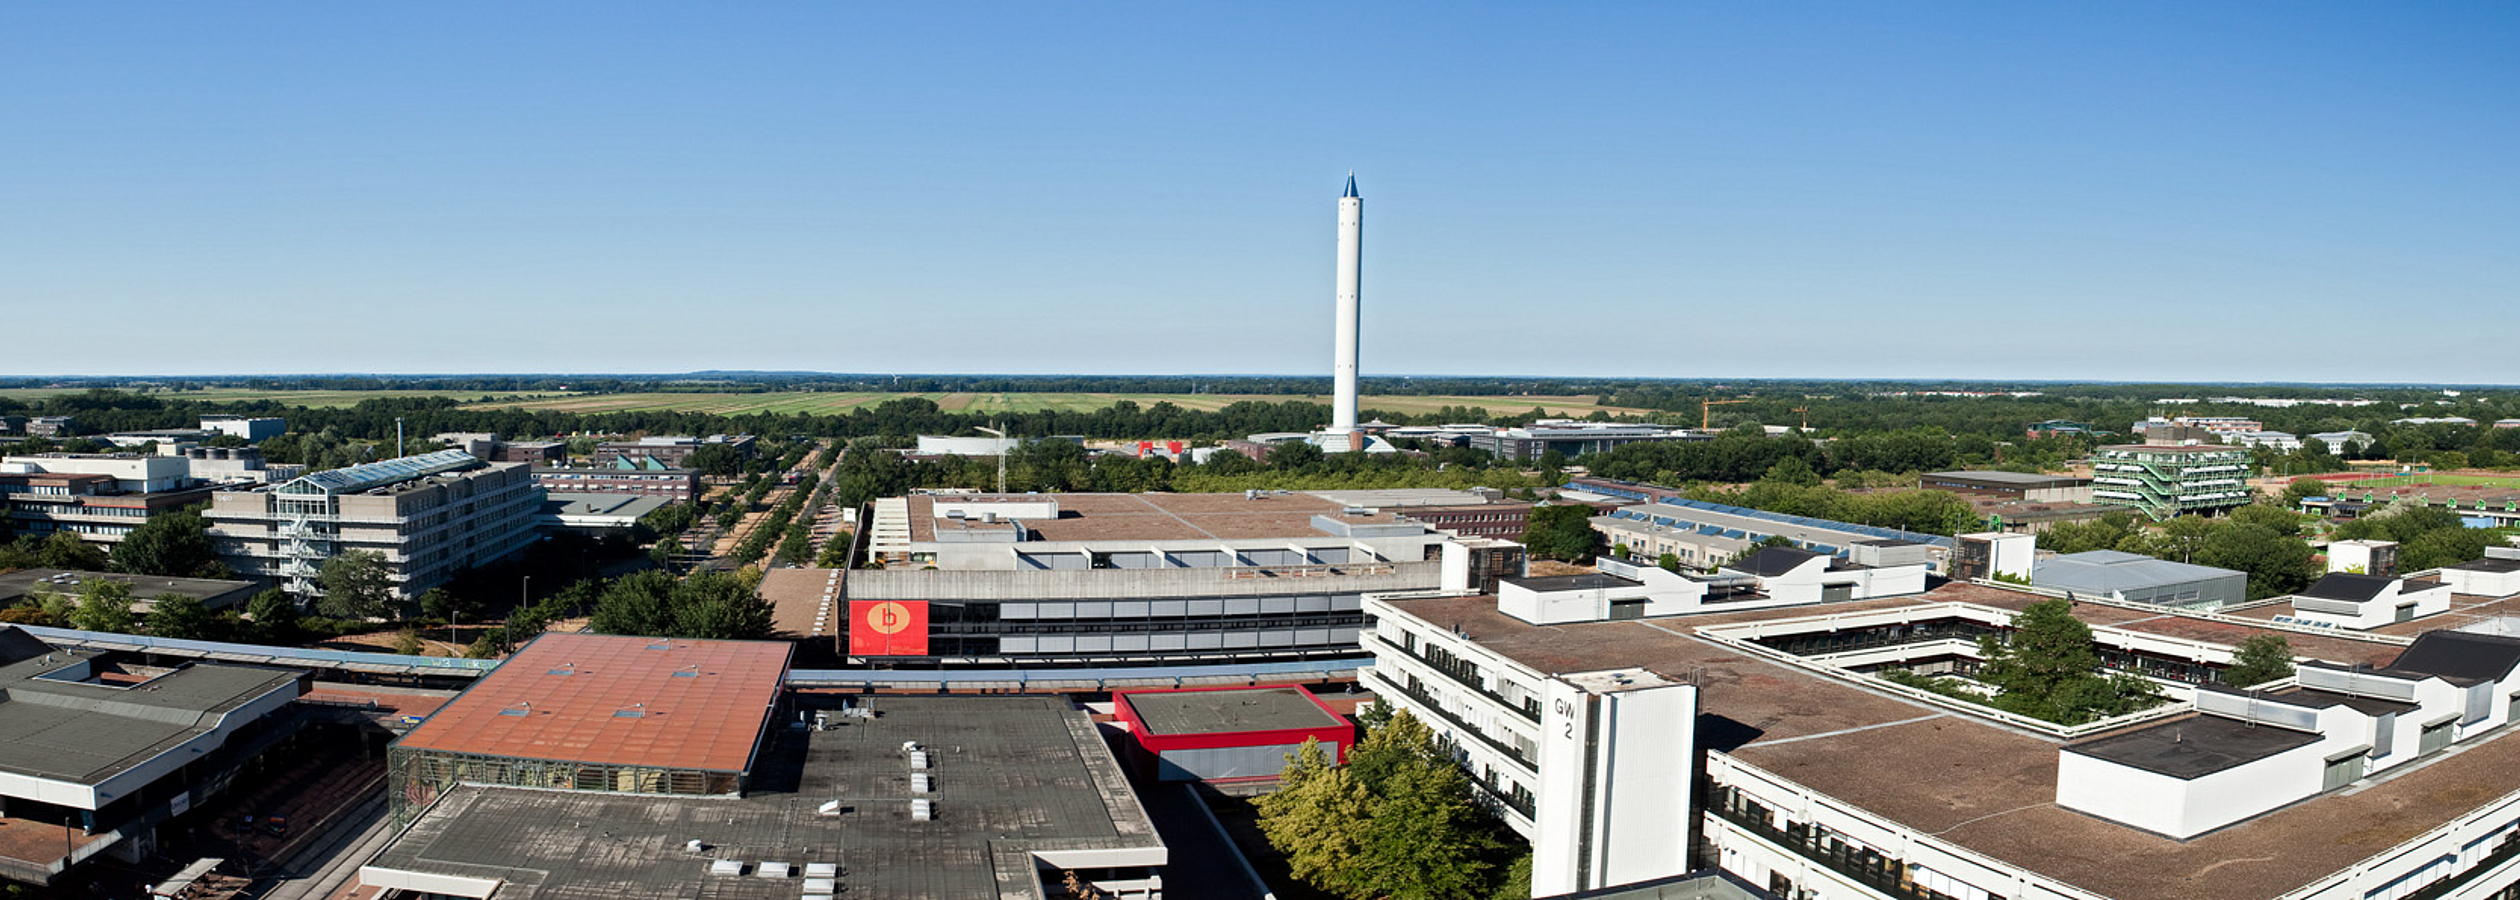 Panoramablick über den Campus.